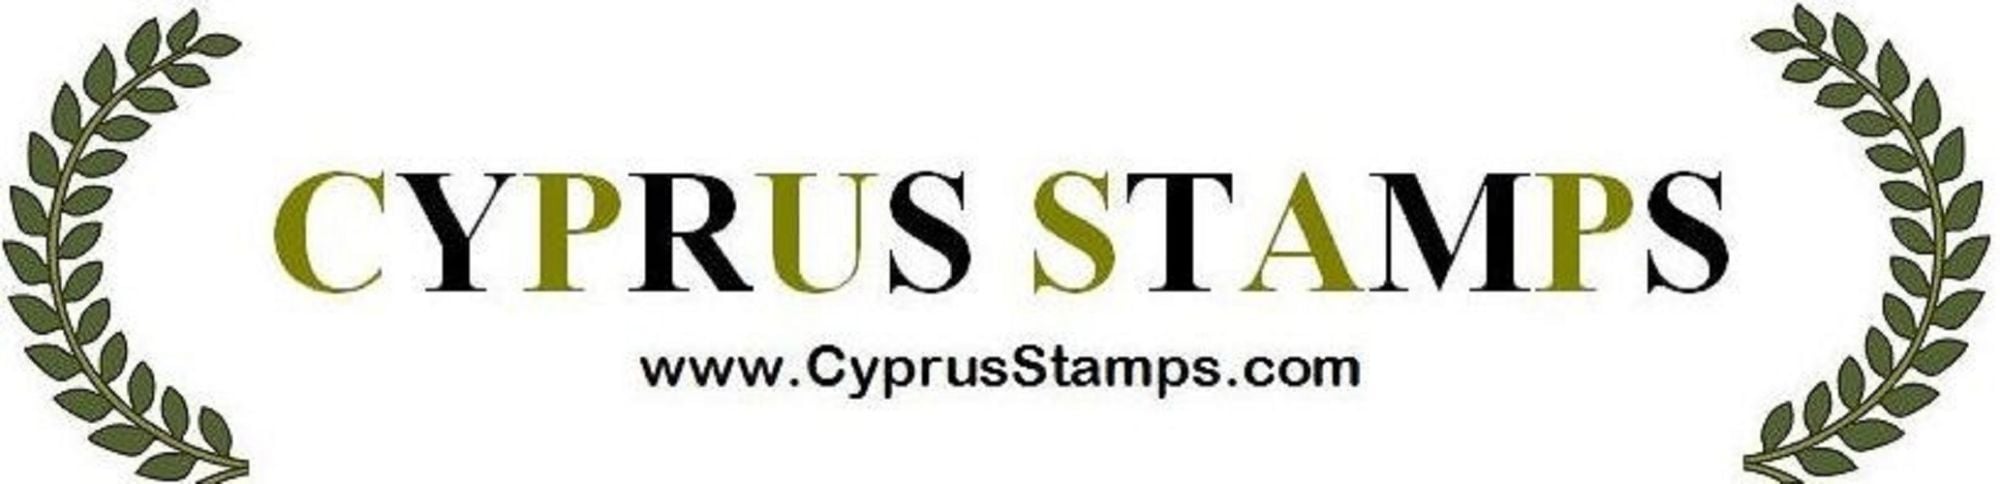 Cyprus Stamps website www.cyprusstamps.com